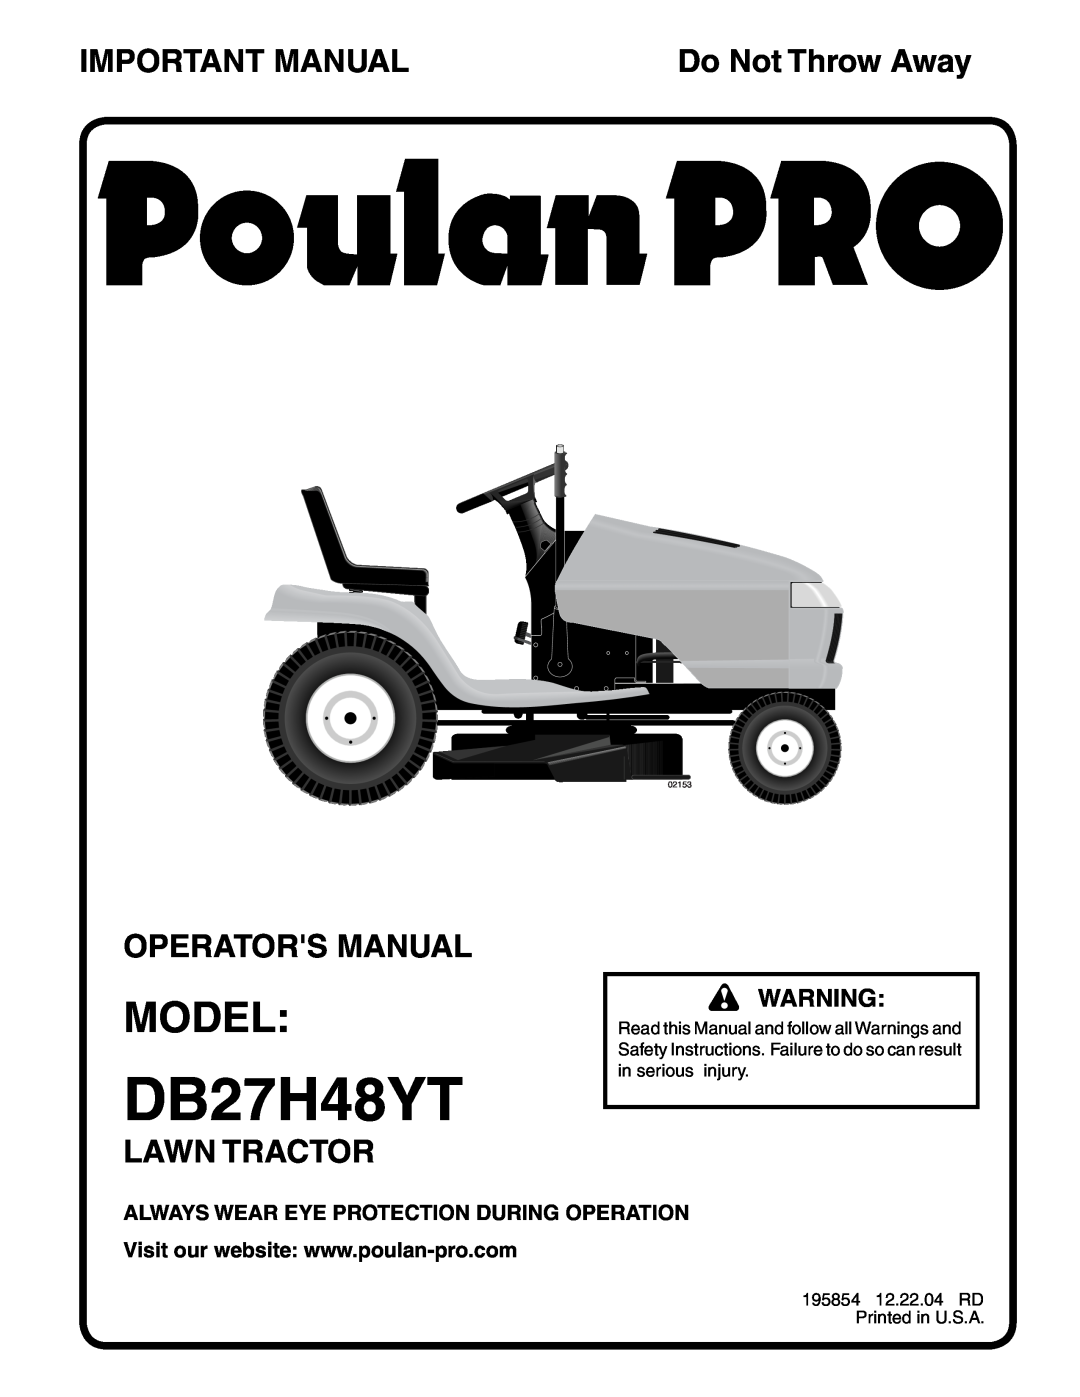 Poulan DB27H48YT manual Model, Important Manual, Operators Manual, Lawn Tractor, Do Not Throw Away, 02153 